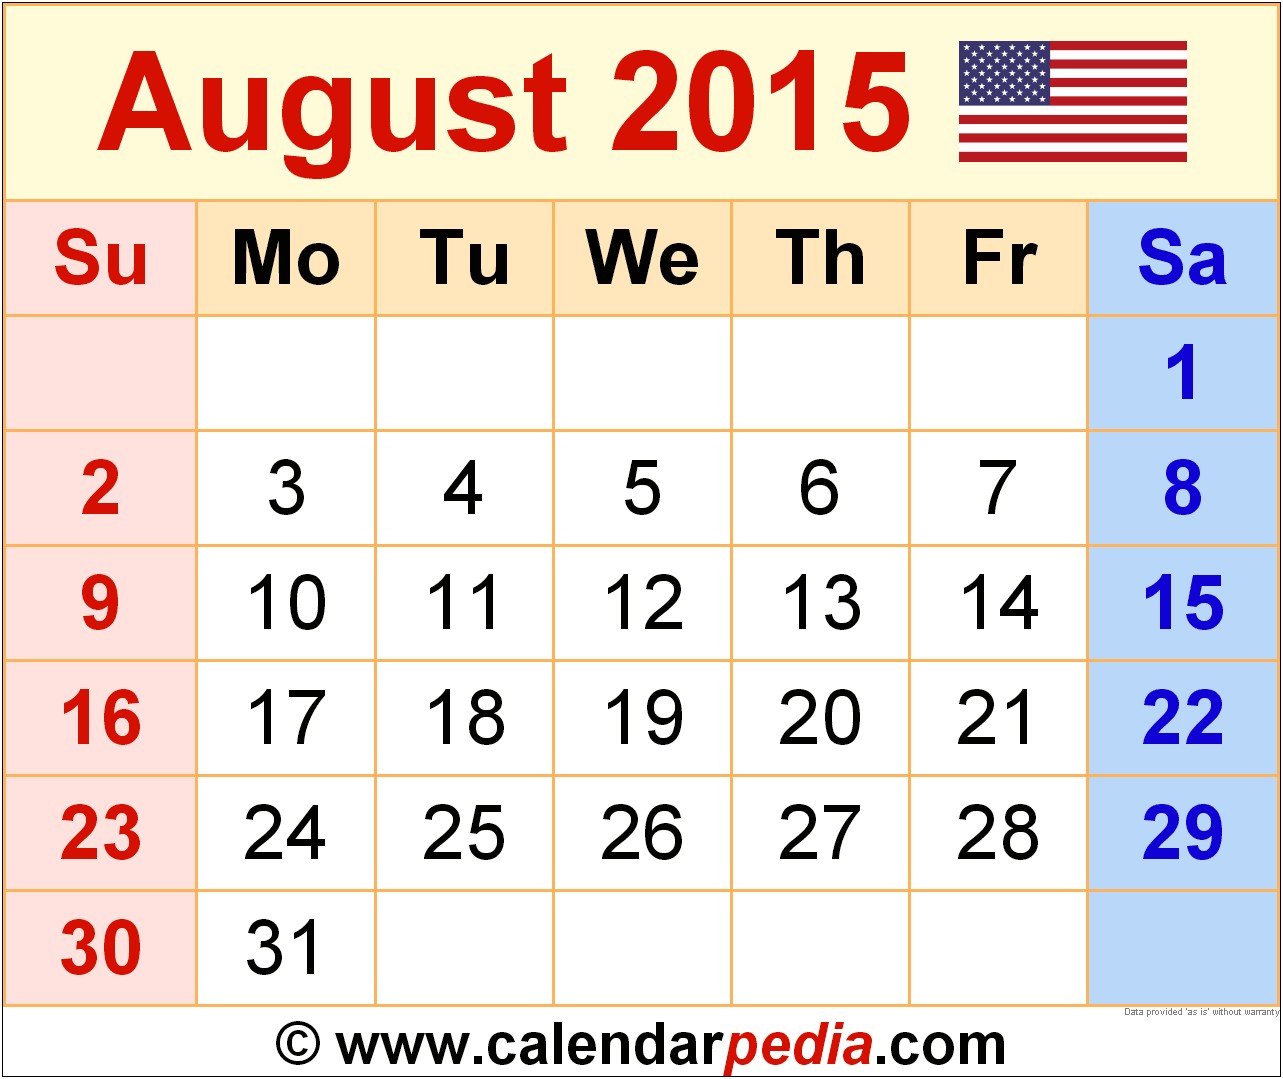 2015 Calendar Template For Word 2010